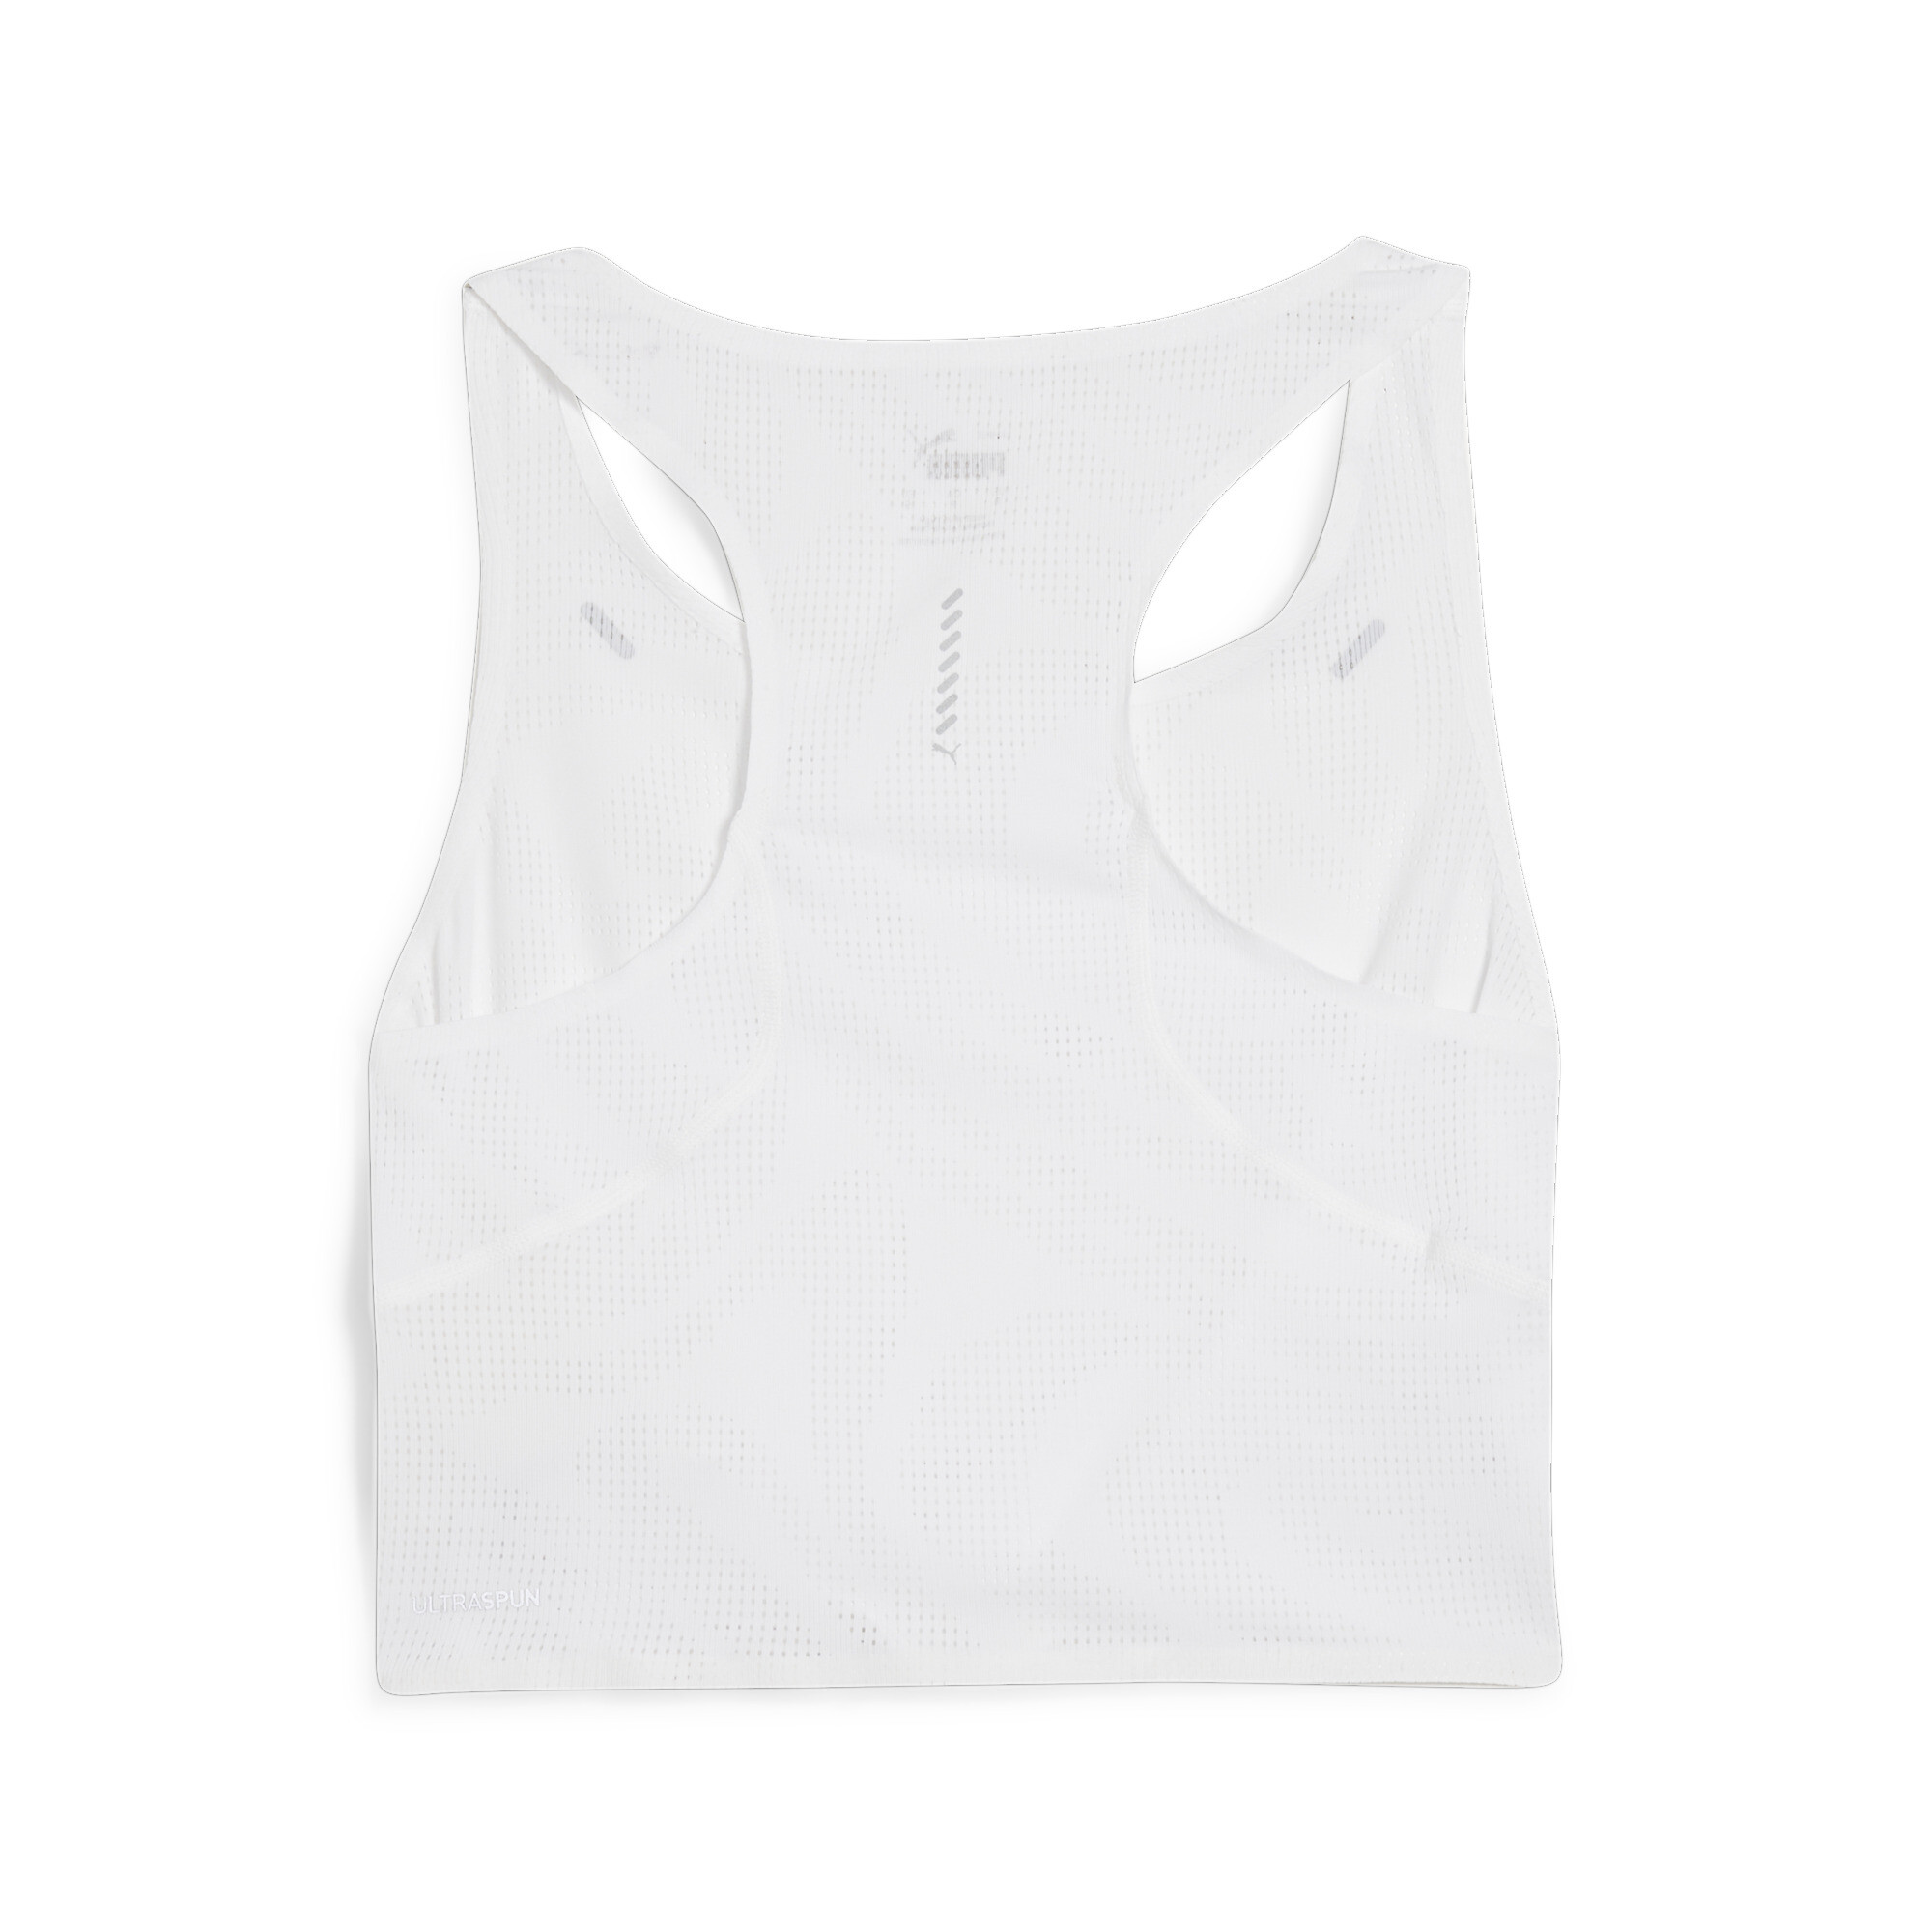 Women's PUMA RUN ULTRASPUN Running Crop Top In White, Size XS